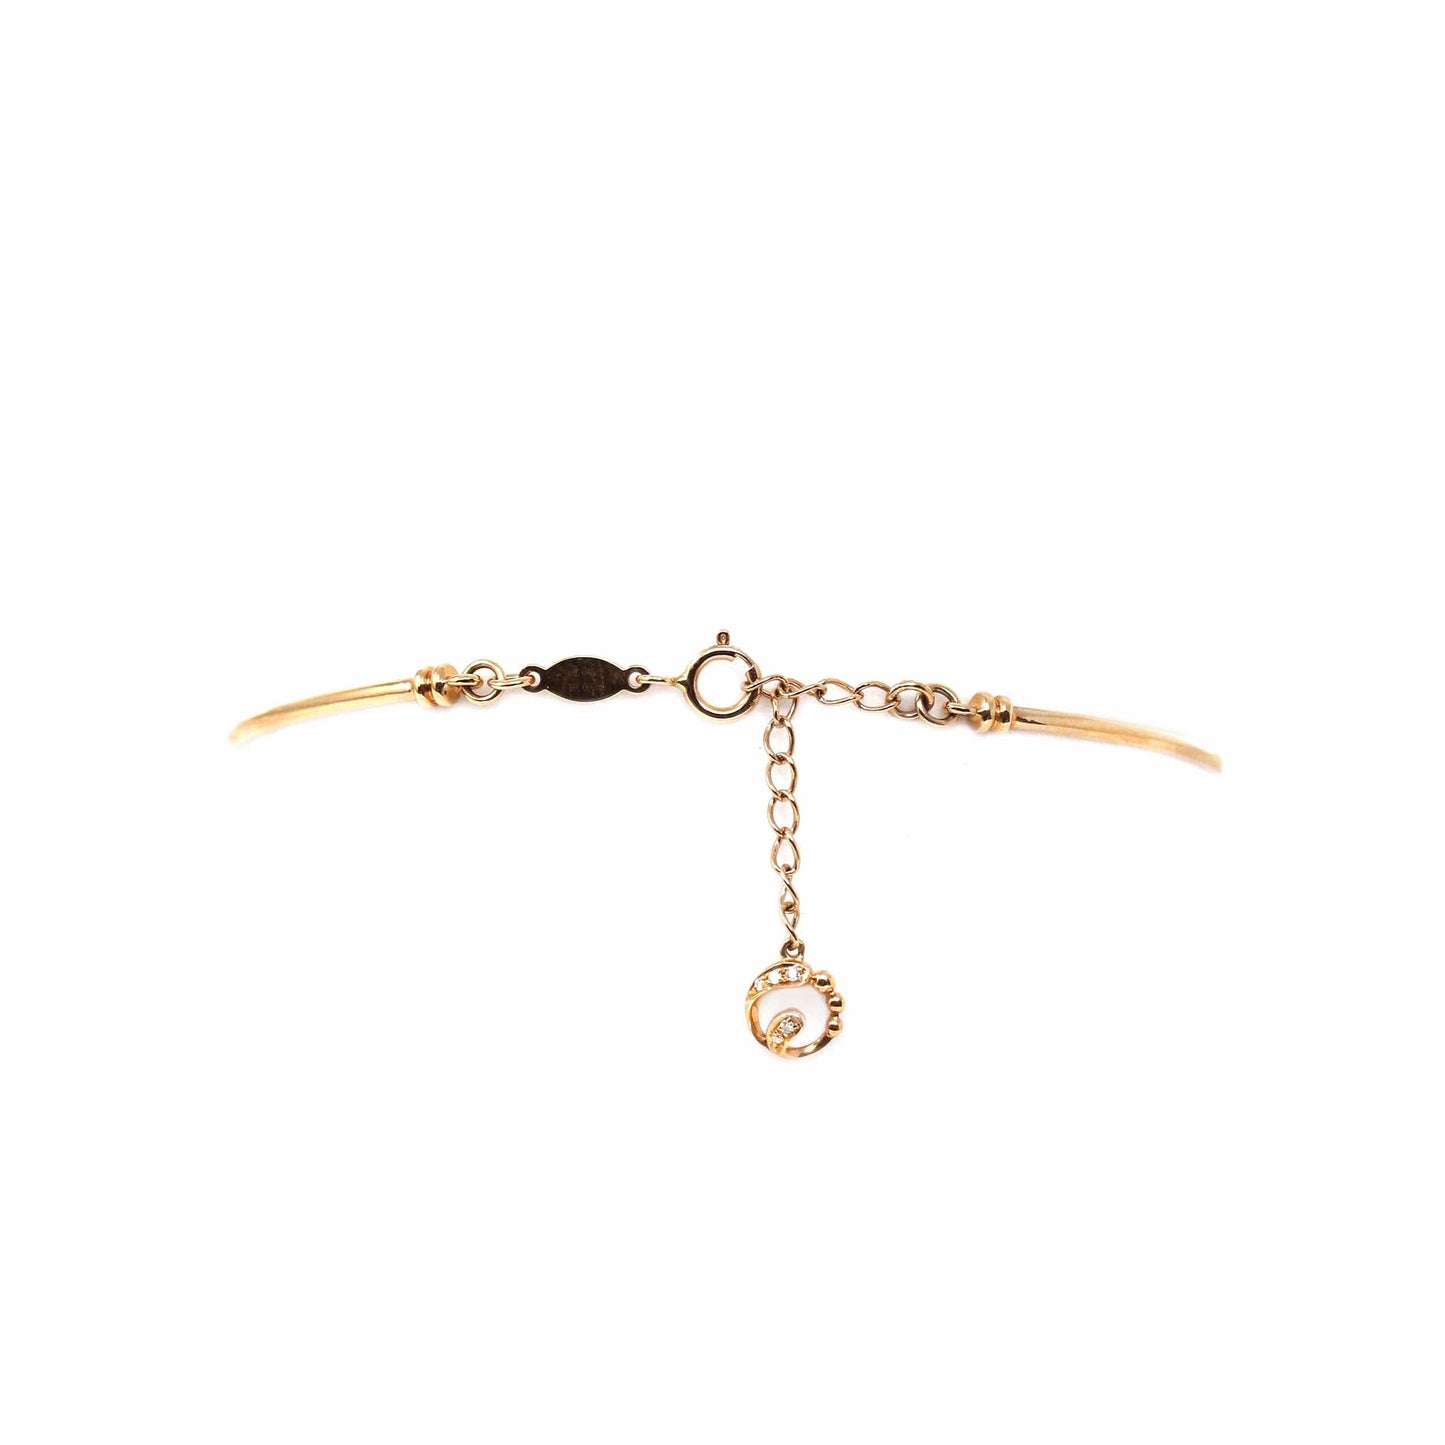 RealJade® Co. Gold Jade Bracelet   18k Rose Gold "Morning Glory" Half Bracelet Bangle with Green Imperial Jade & Diamonds